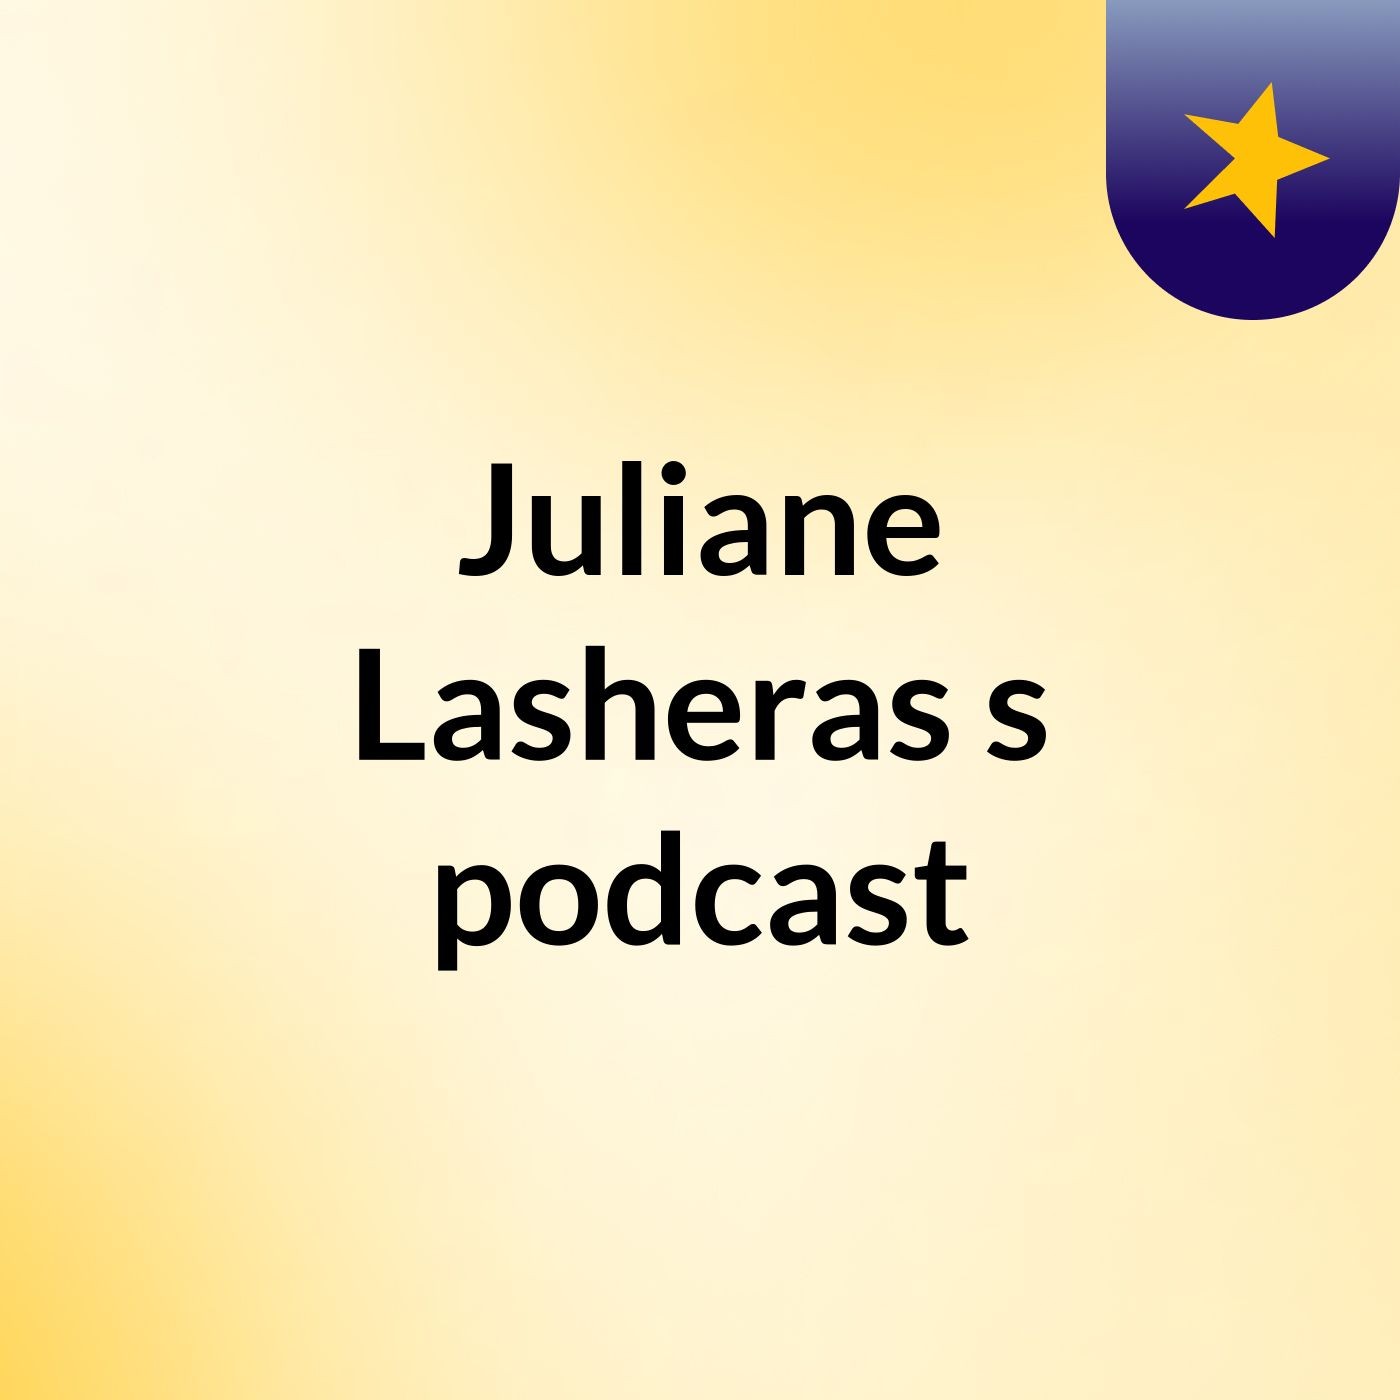 Juliane Lasheras's podcast